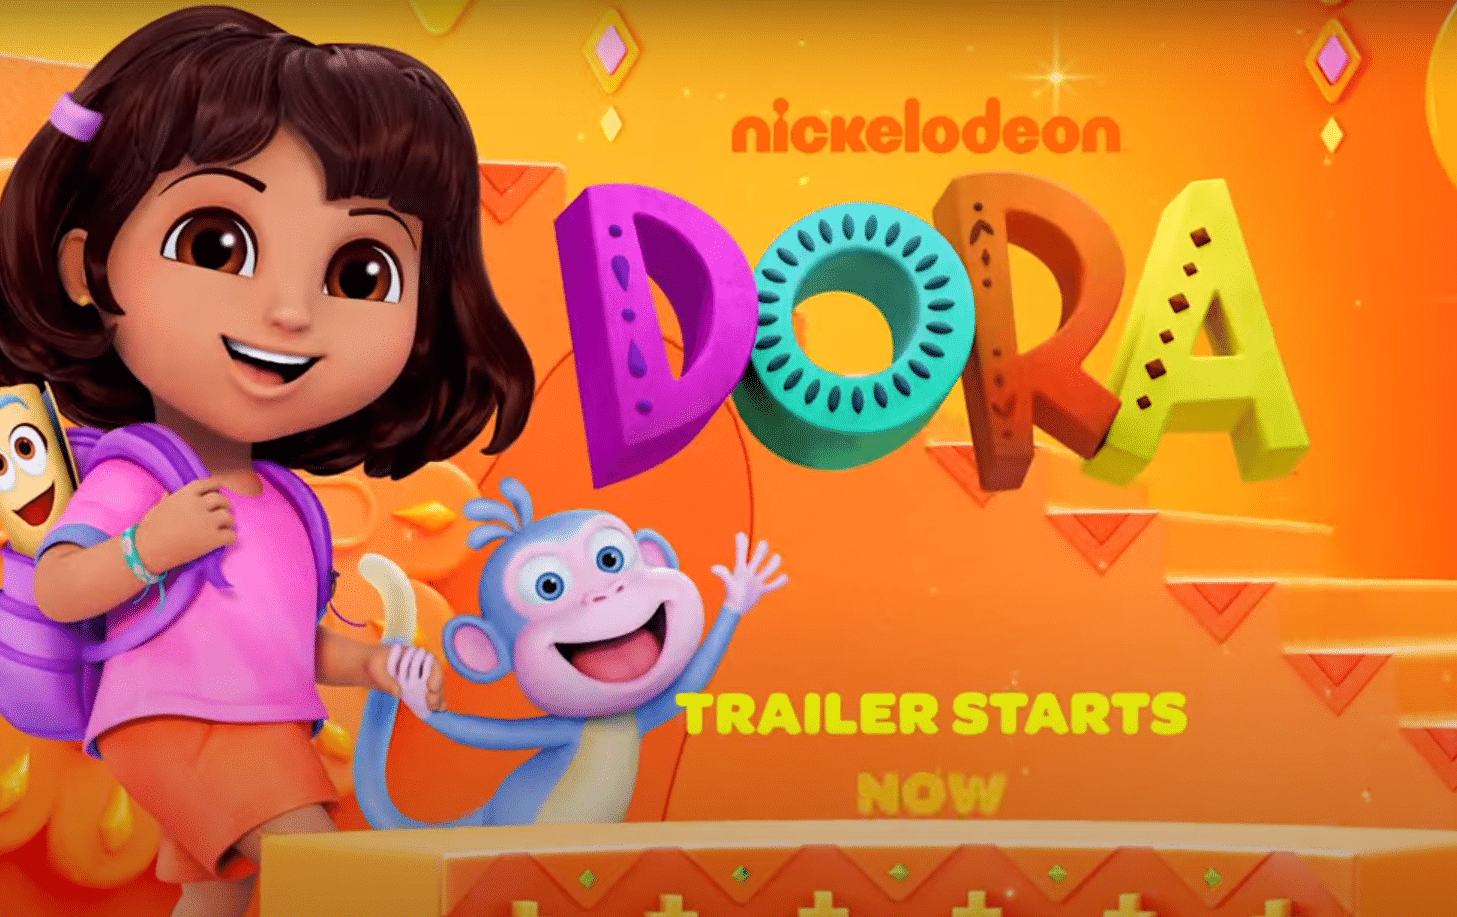 Dora animated series